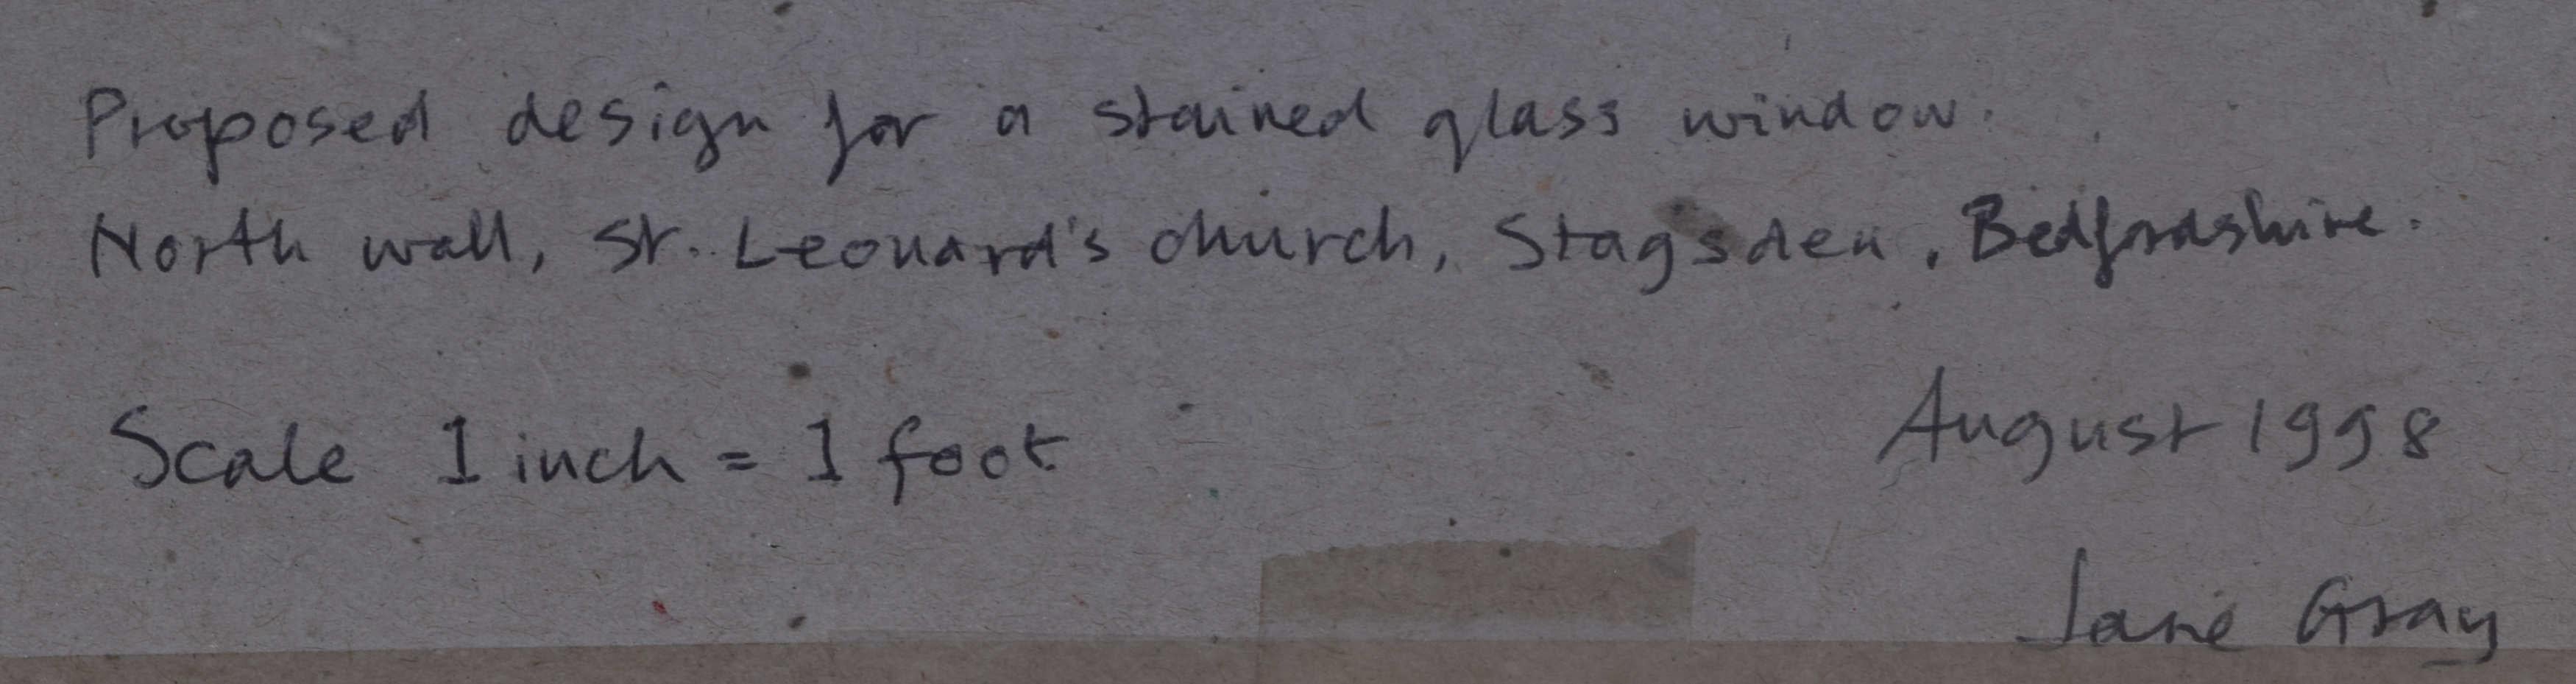 St. Leonards Kirche, Stagsden, Aquarell-Glasfensterdesign, Jane Gray im Angebot 1